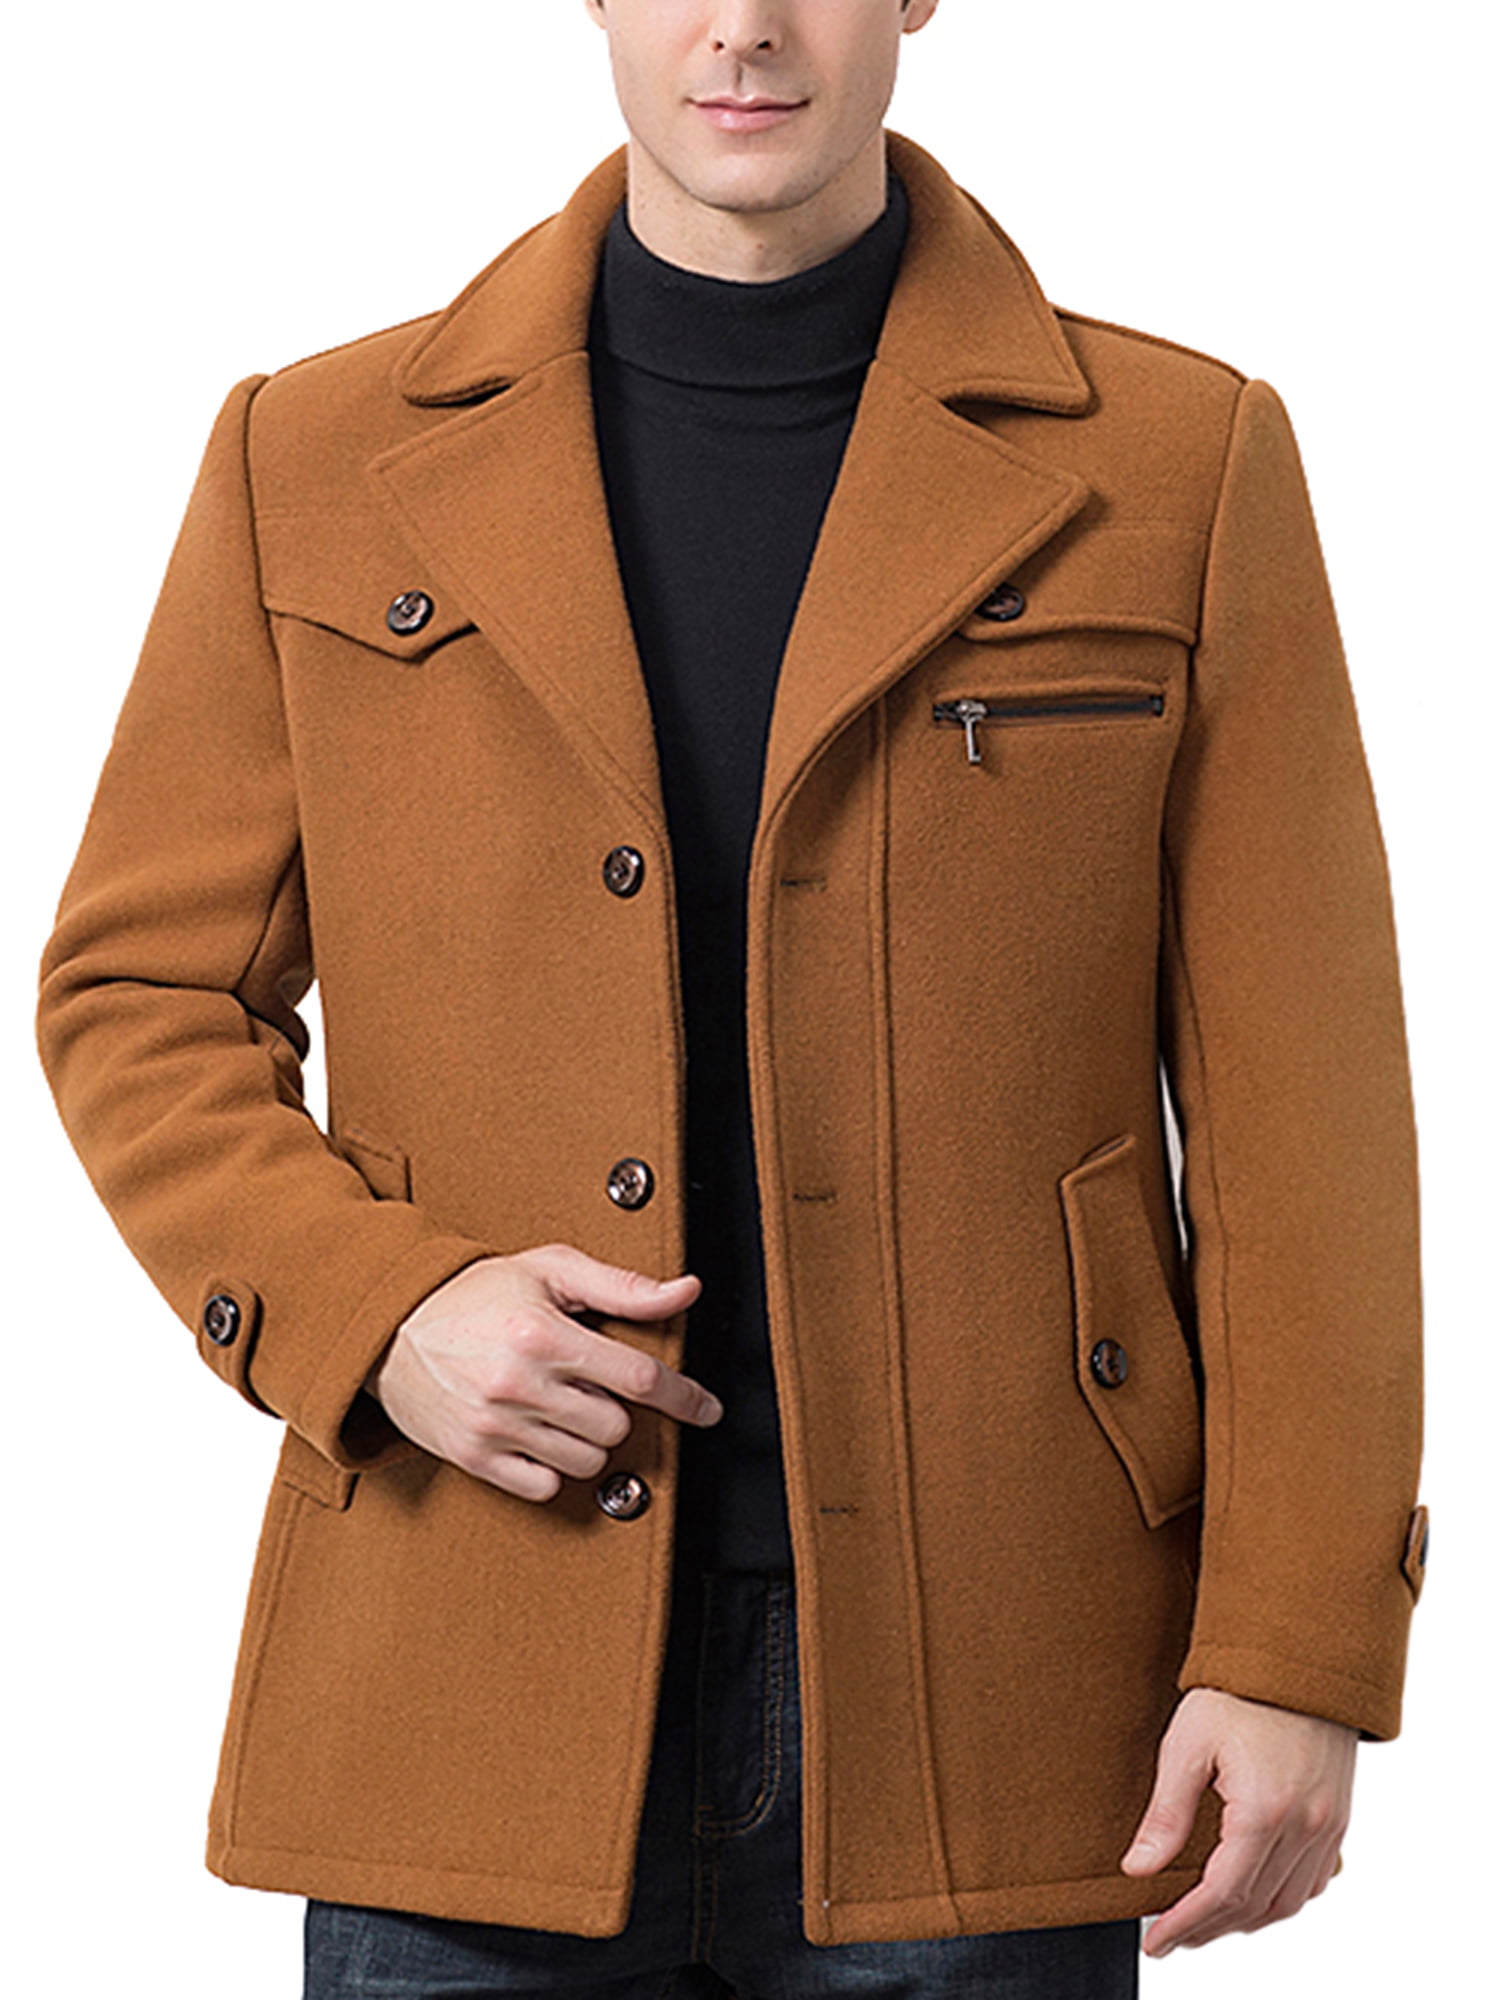 Artificial Wool & Blends Mans Long Jackets 9 Color Options Autumn Winter Coats Men Jacket Size S 5XL